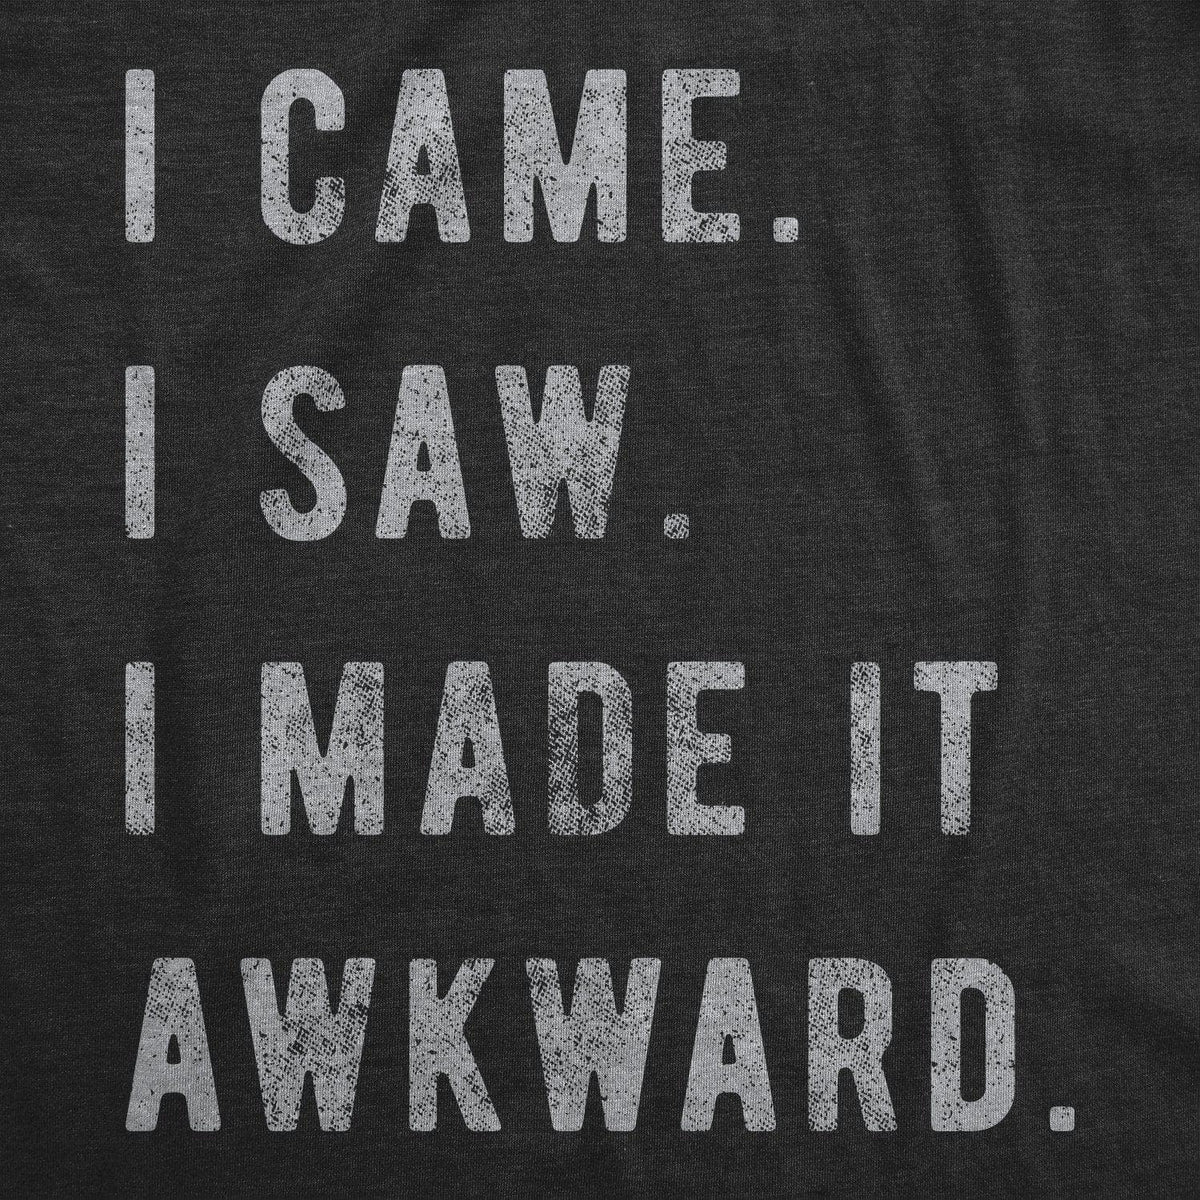 I Came, I Saw, I Made It Awkward Men&#39;s Tshirt - Crazy Dog T-Shirts